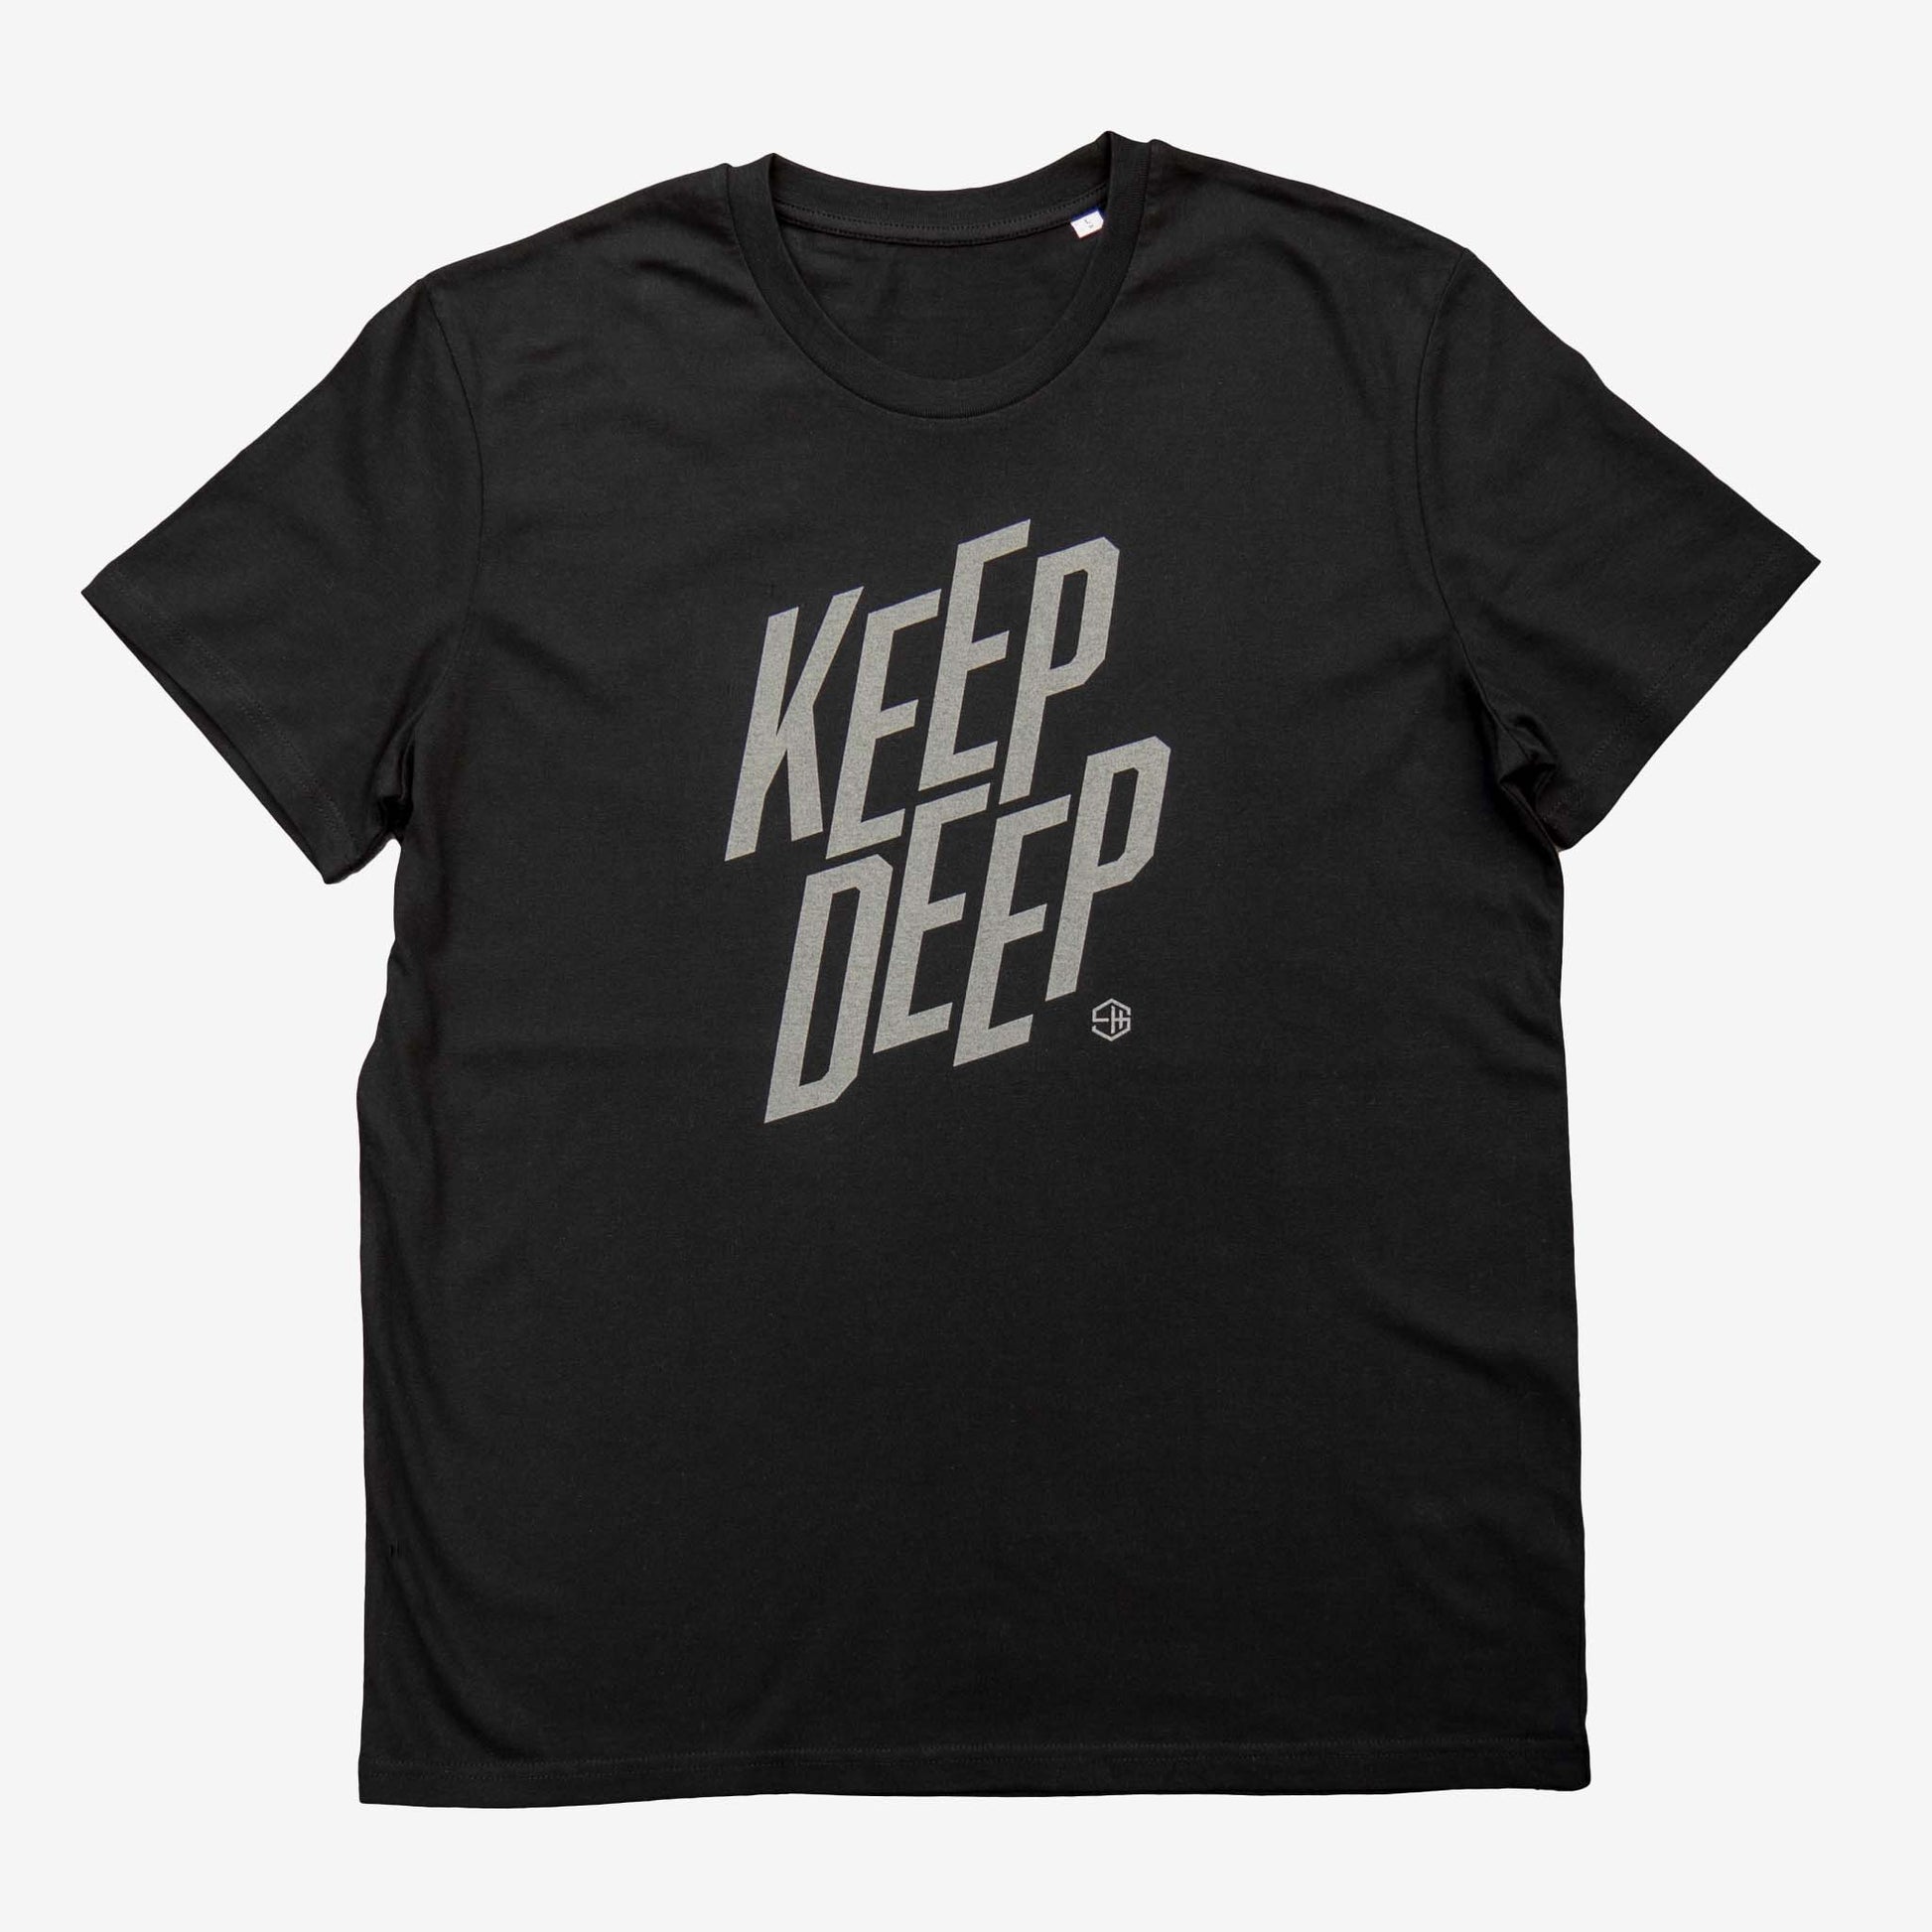 Keep Deep House Music Tshirt Black